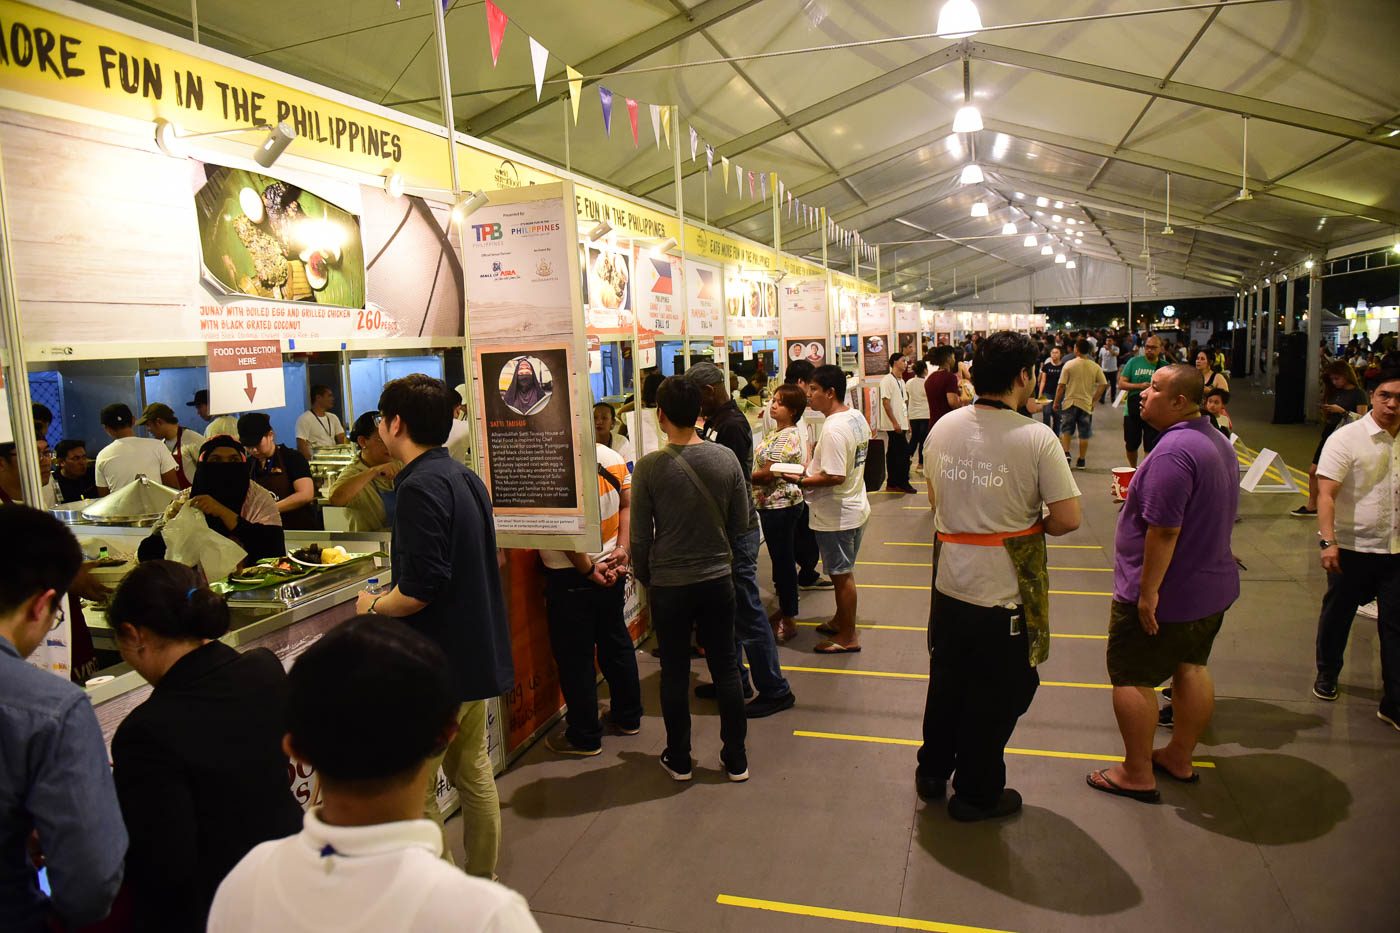 PH tourism board cancels World Street Food Congress 2018 – organizers